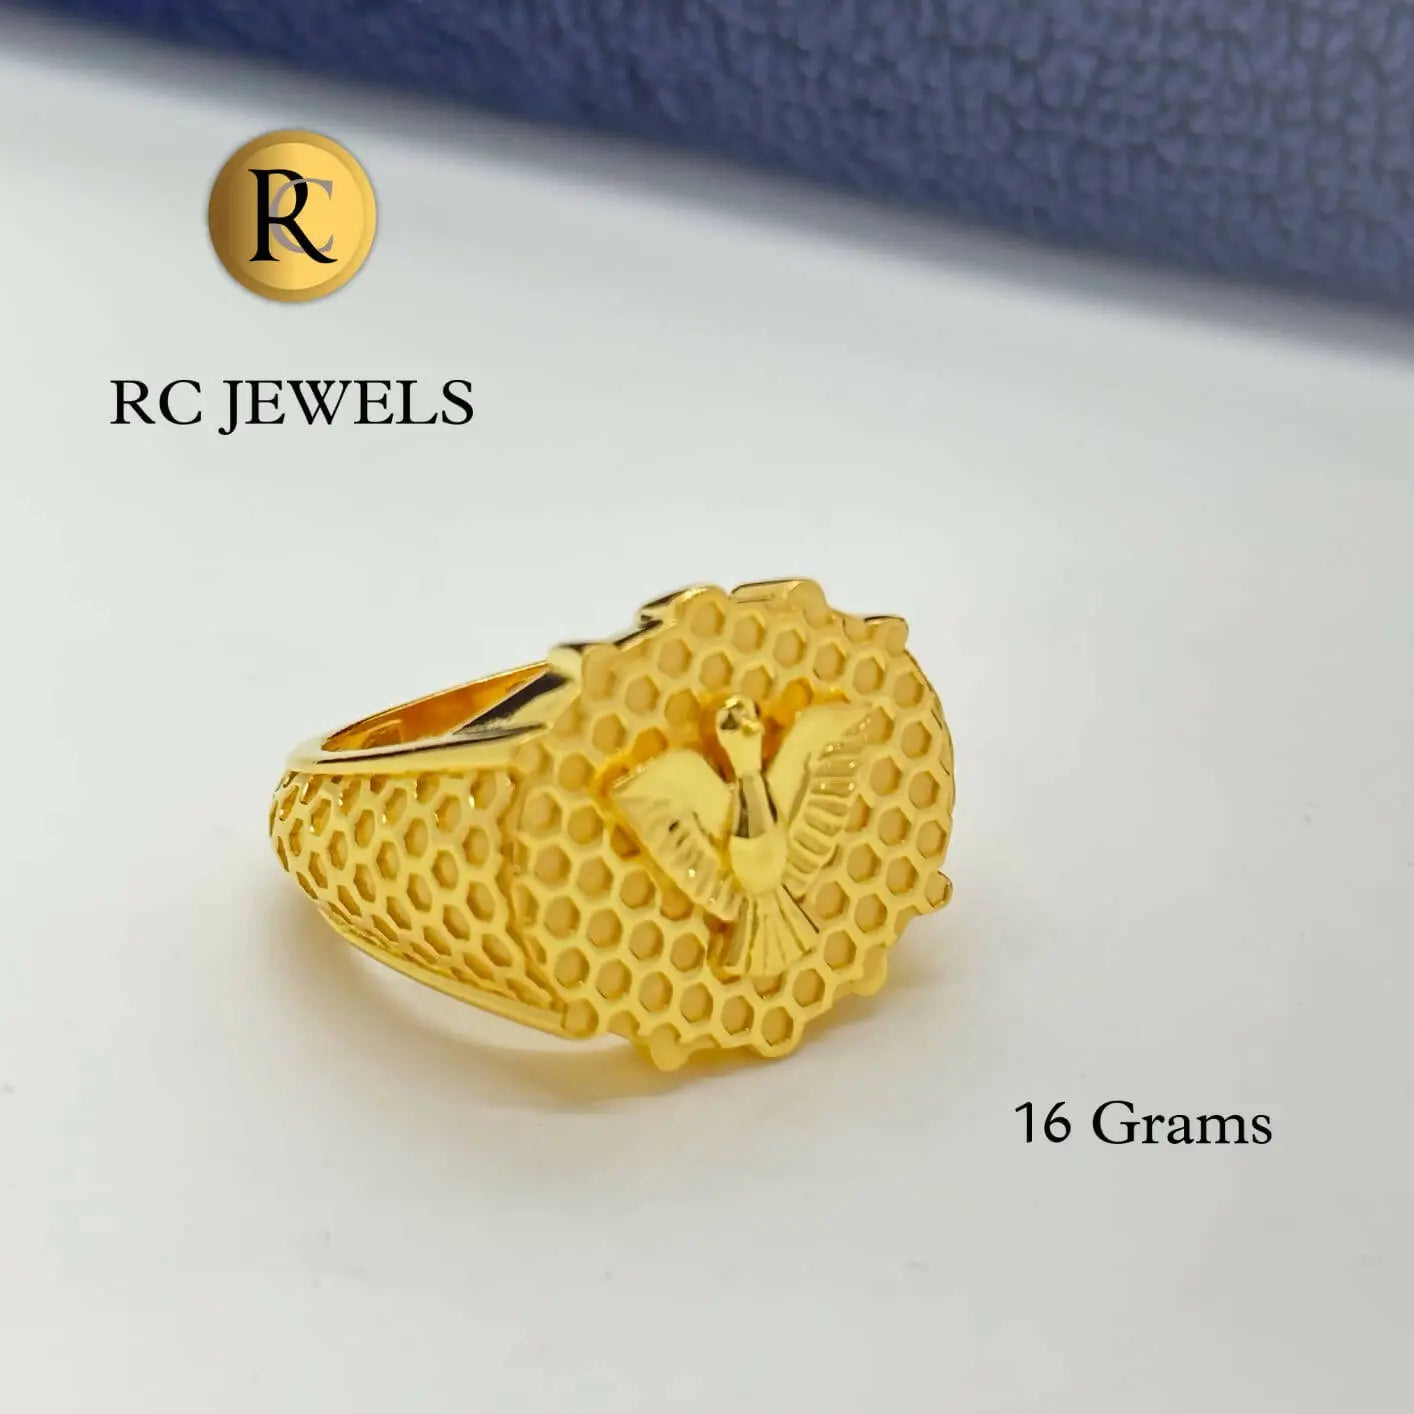 Rebecca S King Crown Diamond Ring - Minimalistic Gold Jewelry Stock  Illustration - Illustration of highquality, royalinspired: 294366169